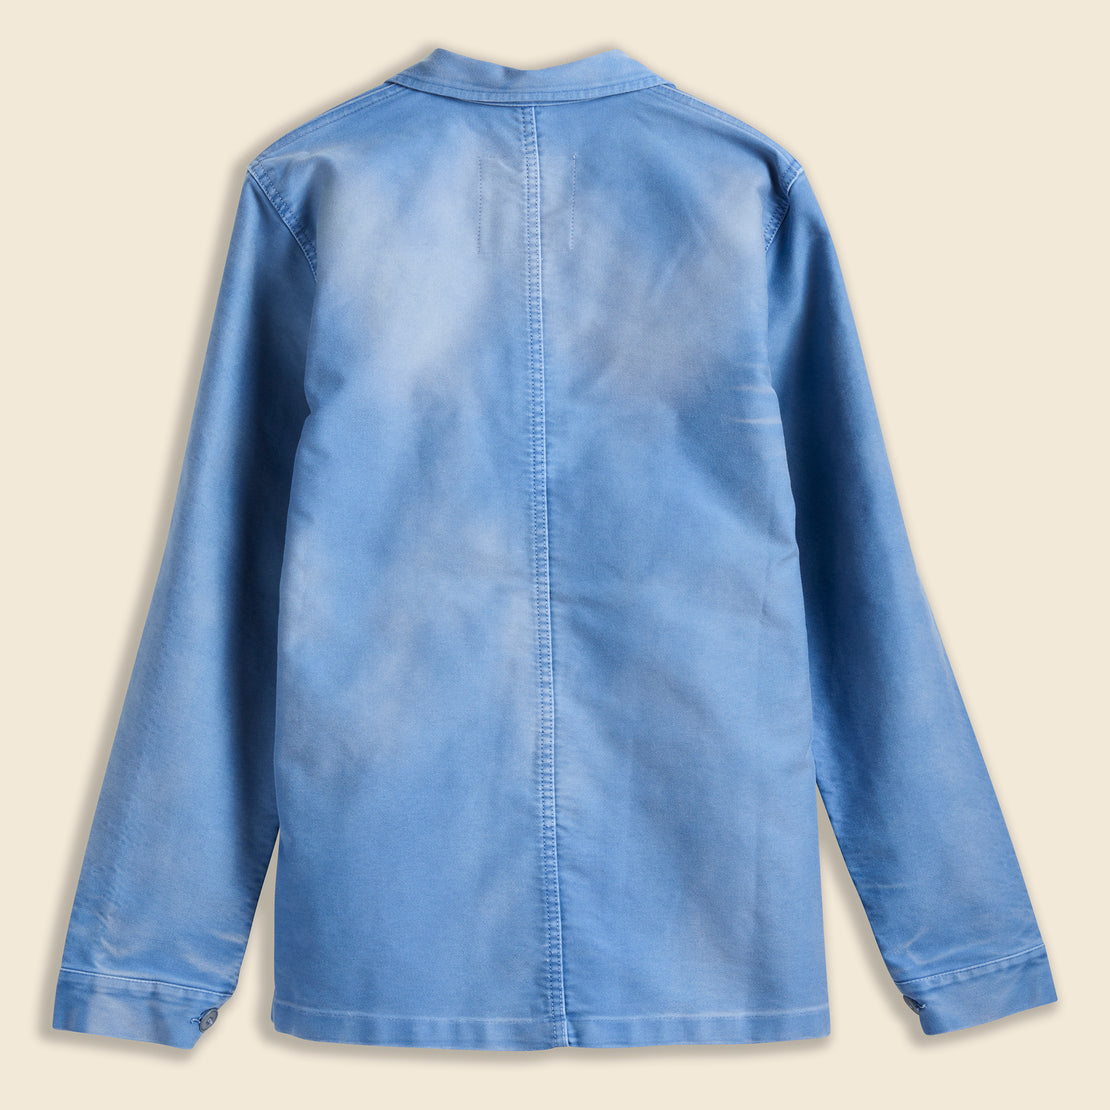 Vintage Washed Work Jacket - Blue - Le Mont Saint Michel - STAG Provisions - W - Outerwear - Coat/Jacket